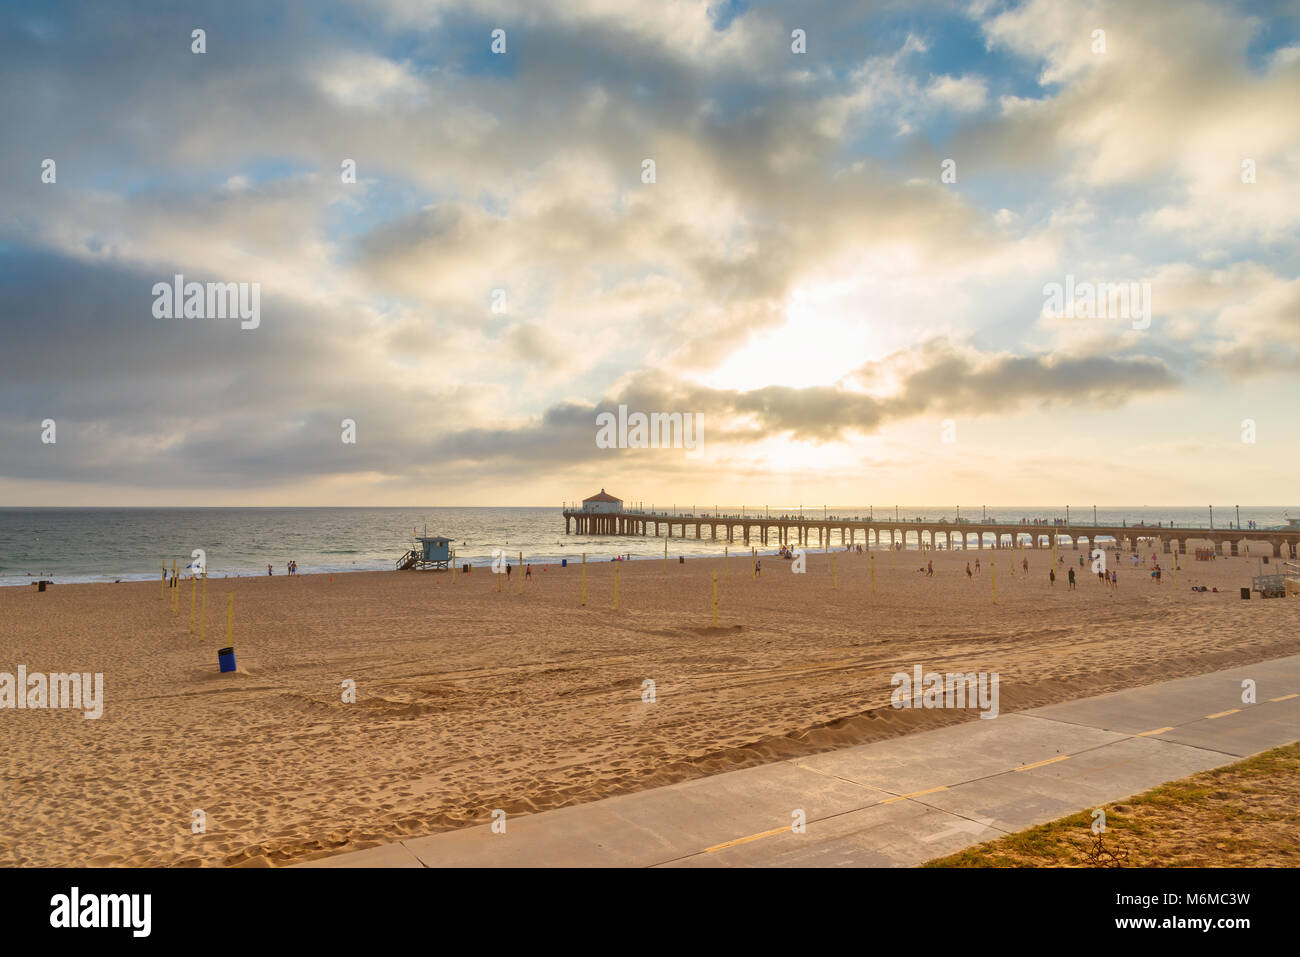 Manhattan beach and pier at sunset, Los Angeles, California. Stock Photo